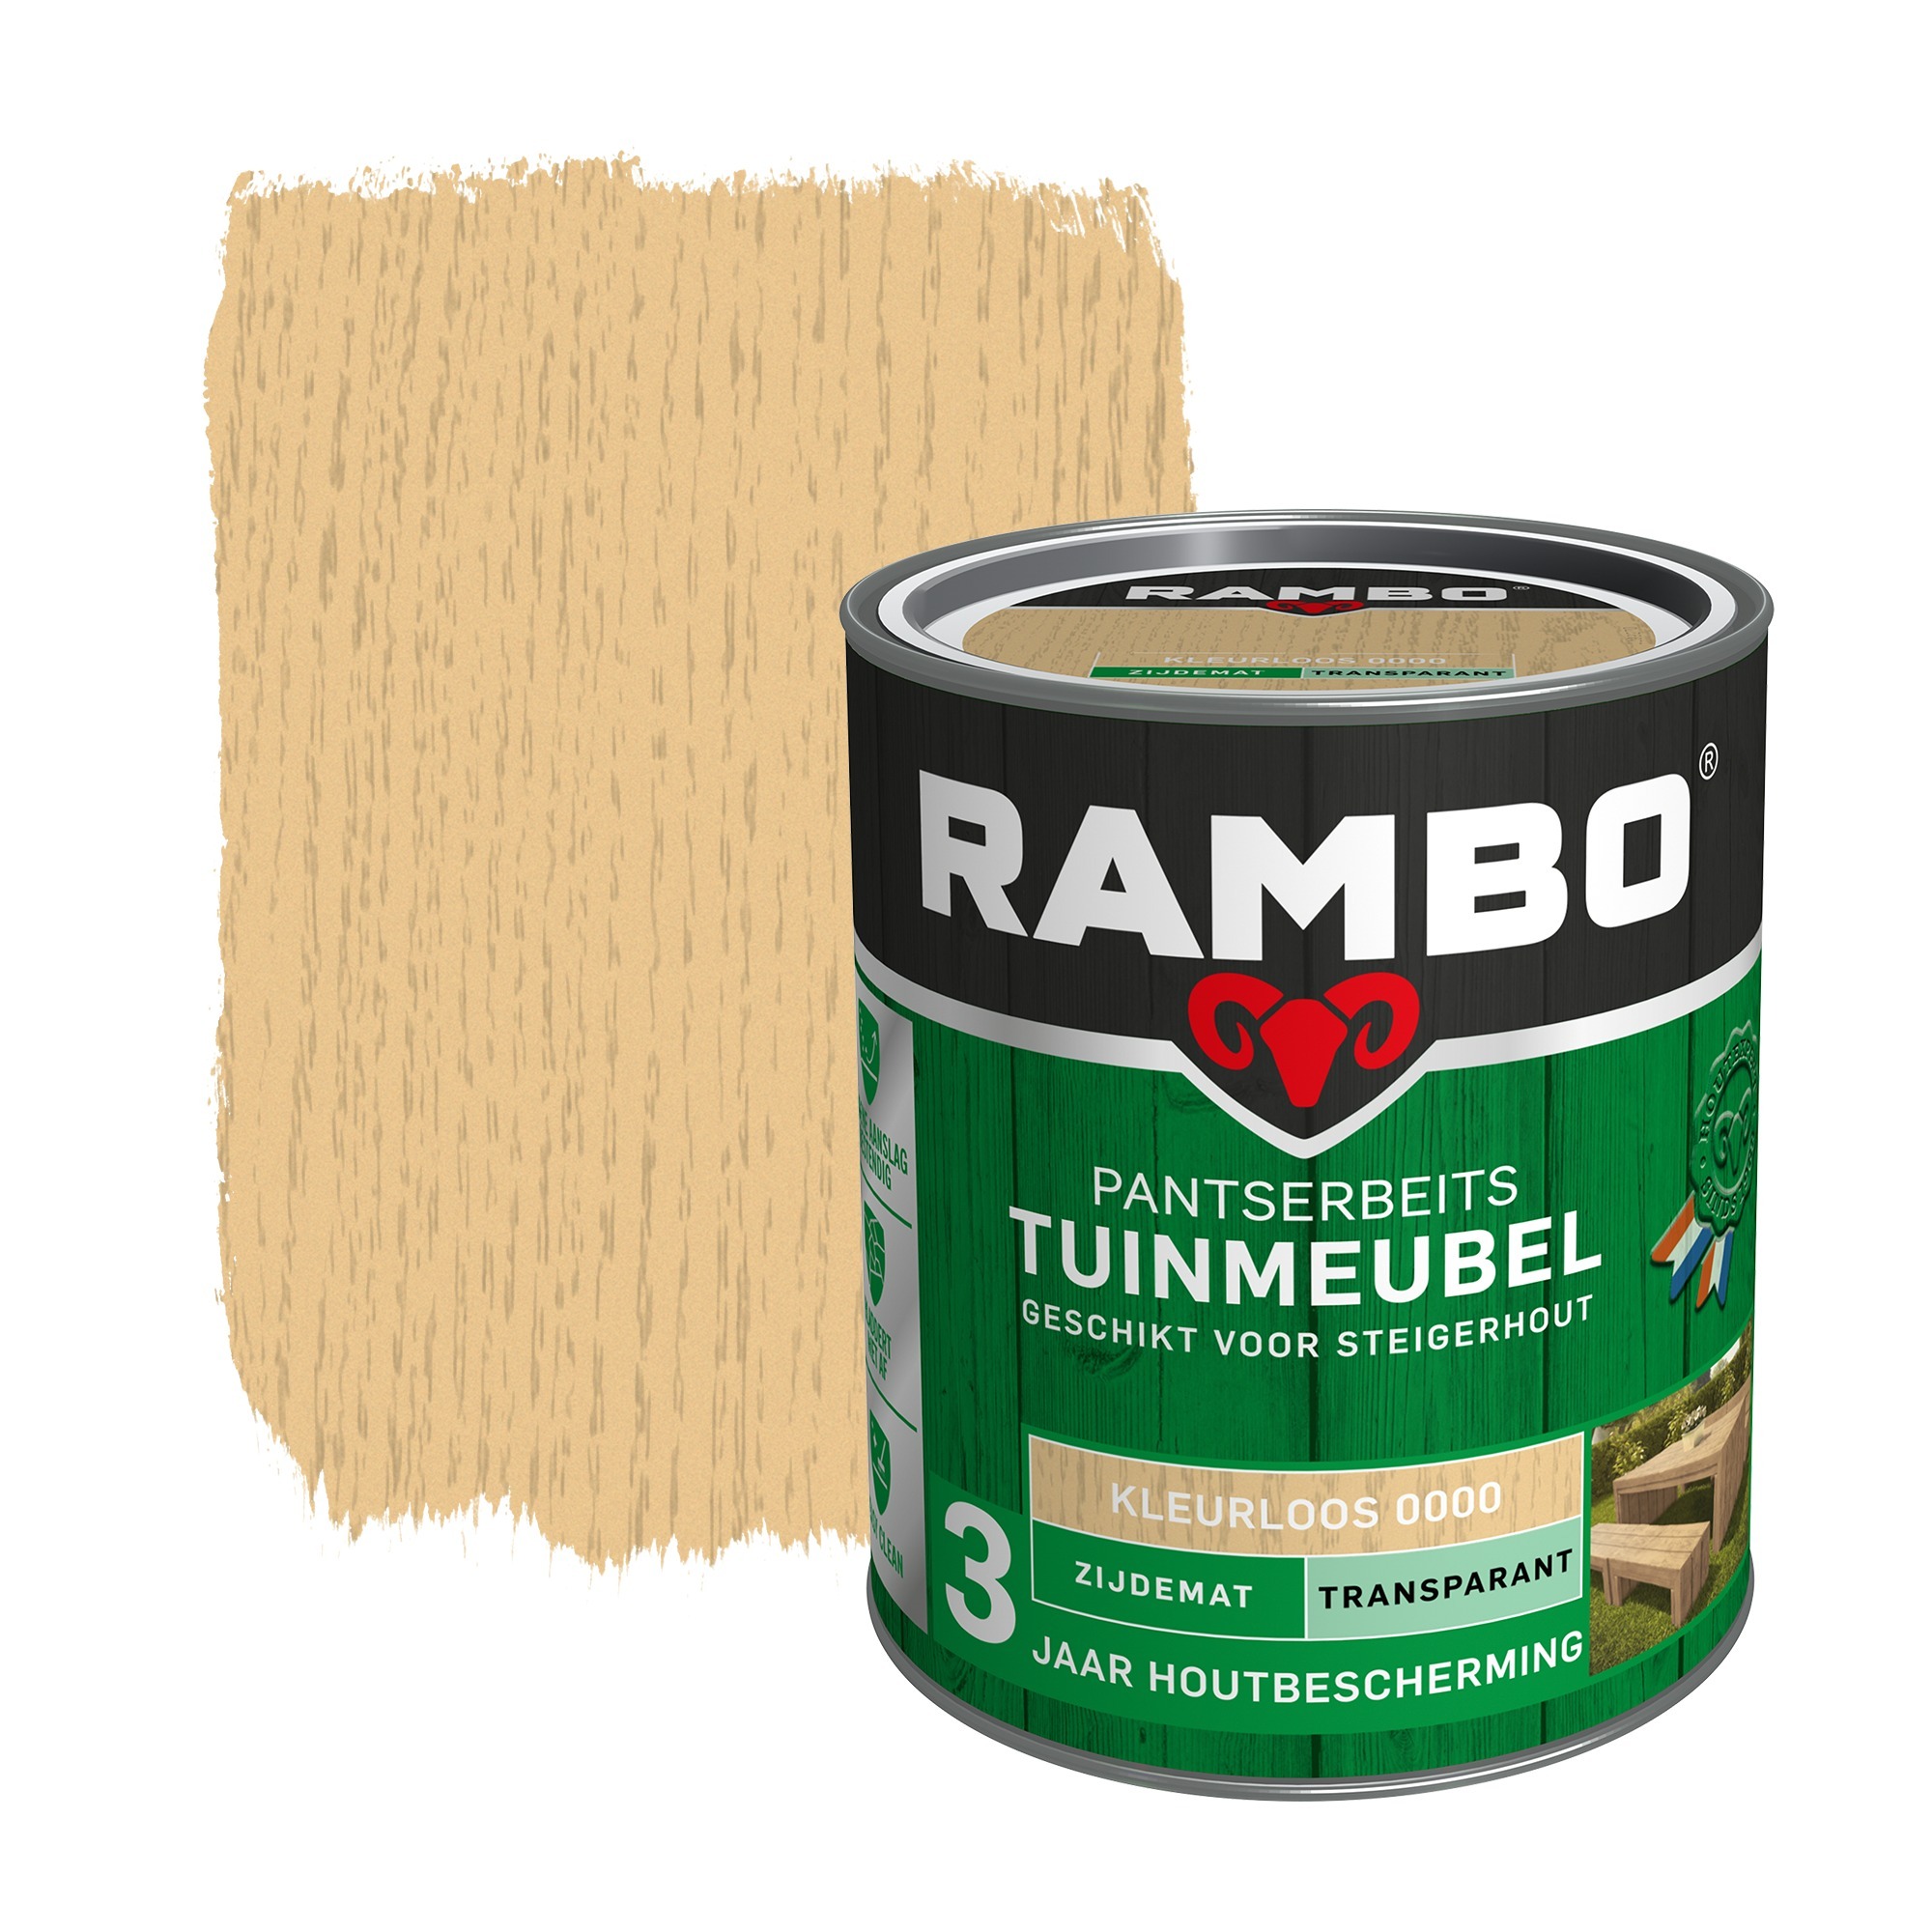 Rambo Pantserbeits Tuinmeubel Zijdemat Transparant